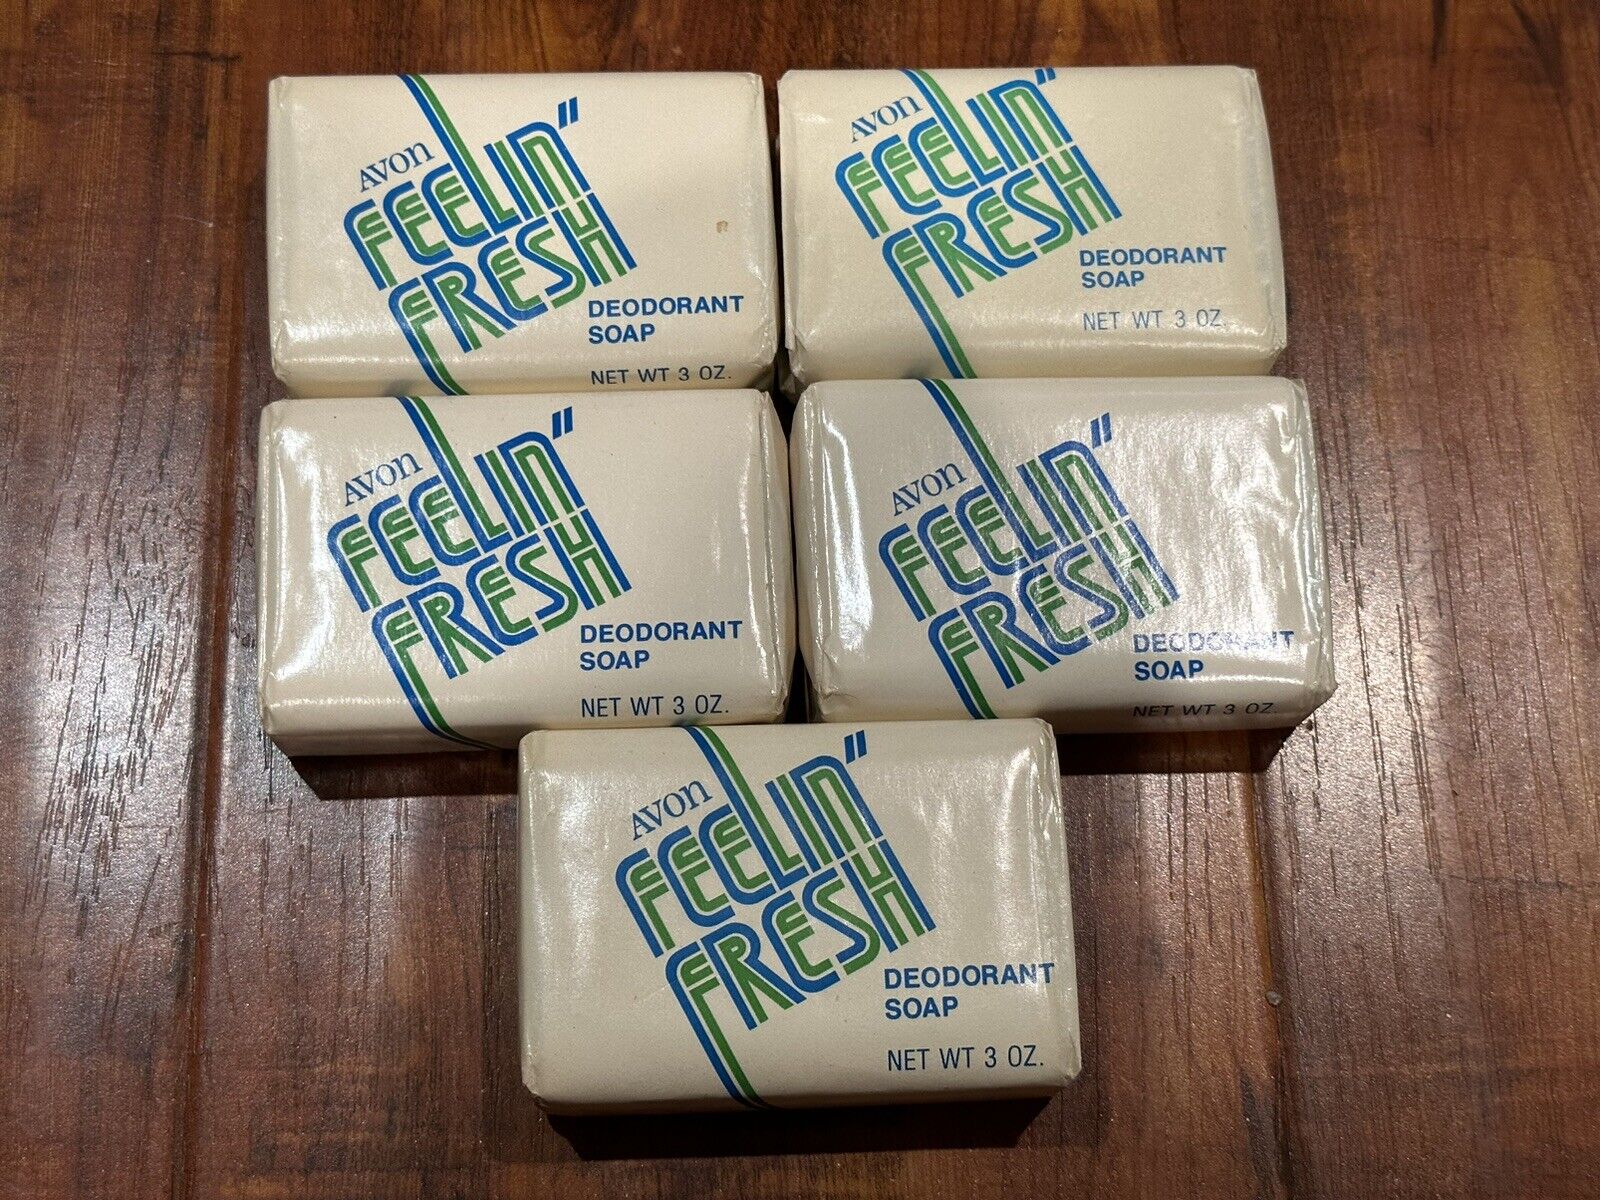 Lot of (5) Vintage 1983 Avon Feelin’ Fresh Deodorant Soap 3 Oz. Bars - New NOS